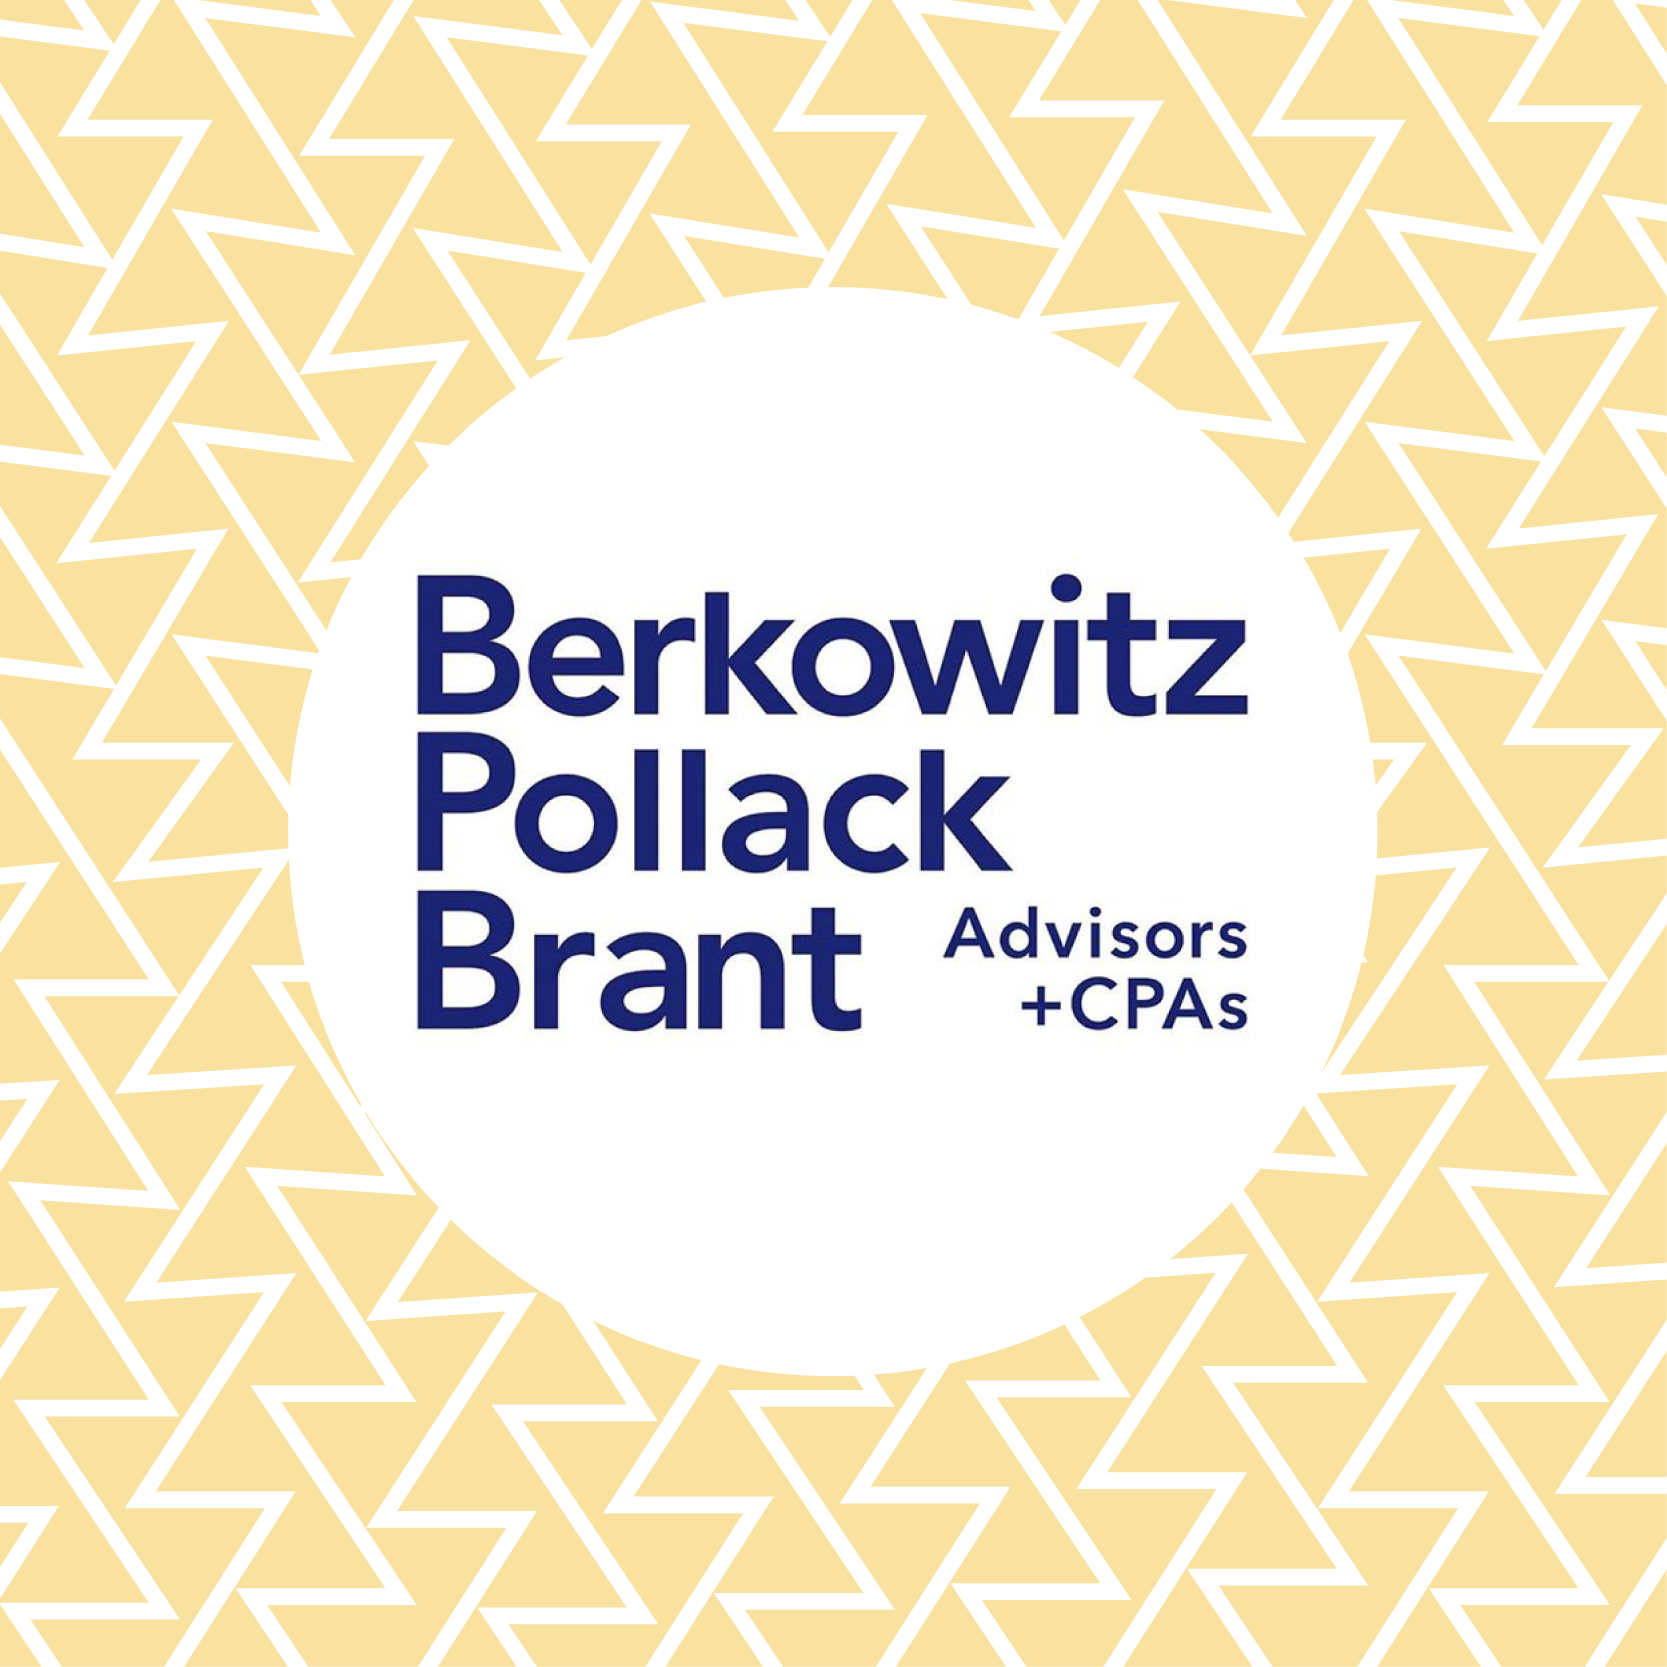 Berkowitz Pollack Brant